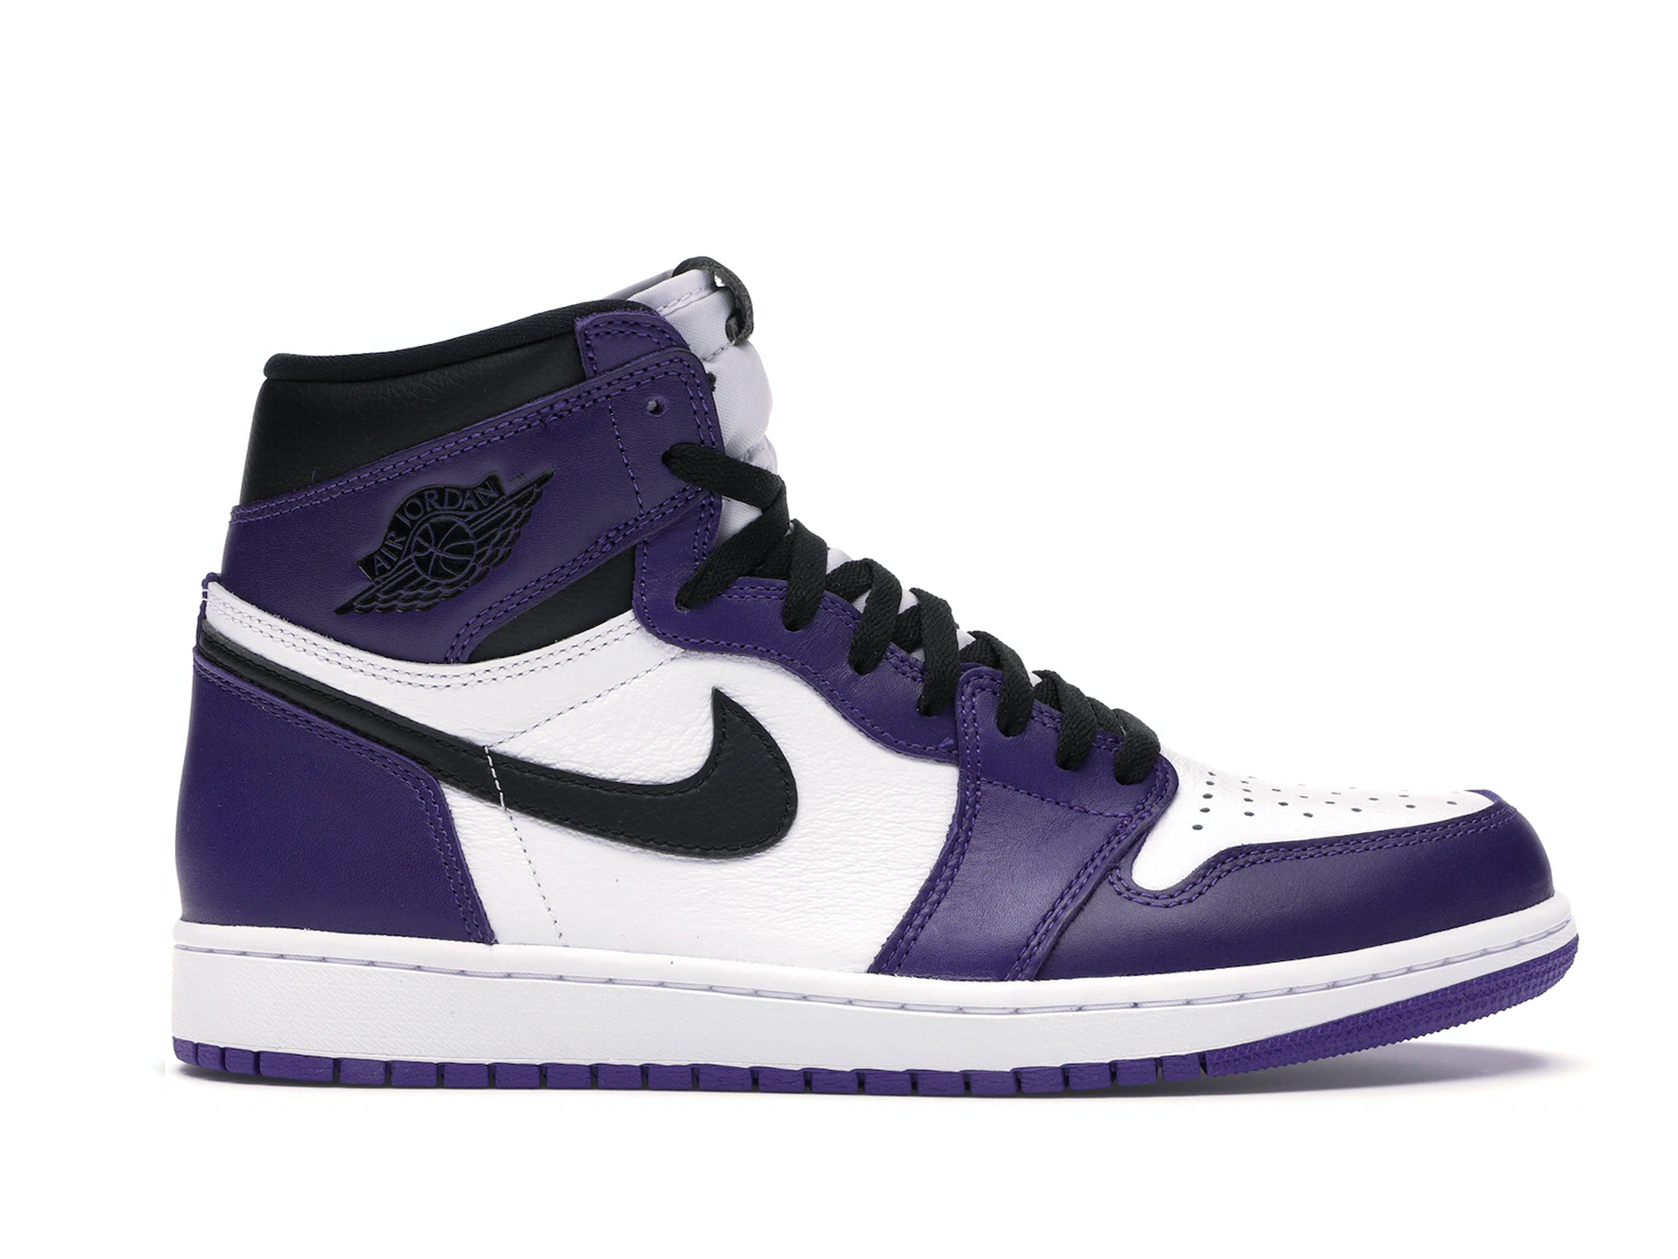 Double Boxed  259.99 Nike Air Jordan 1 Retro High Court Purple White Double Boxed